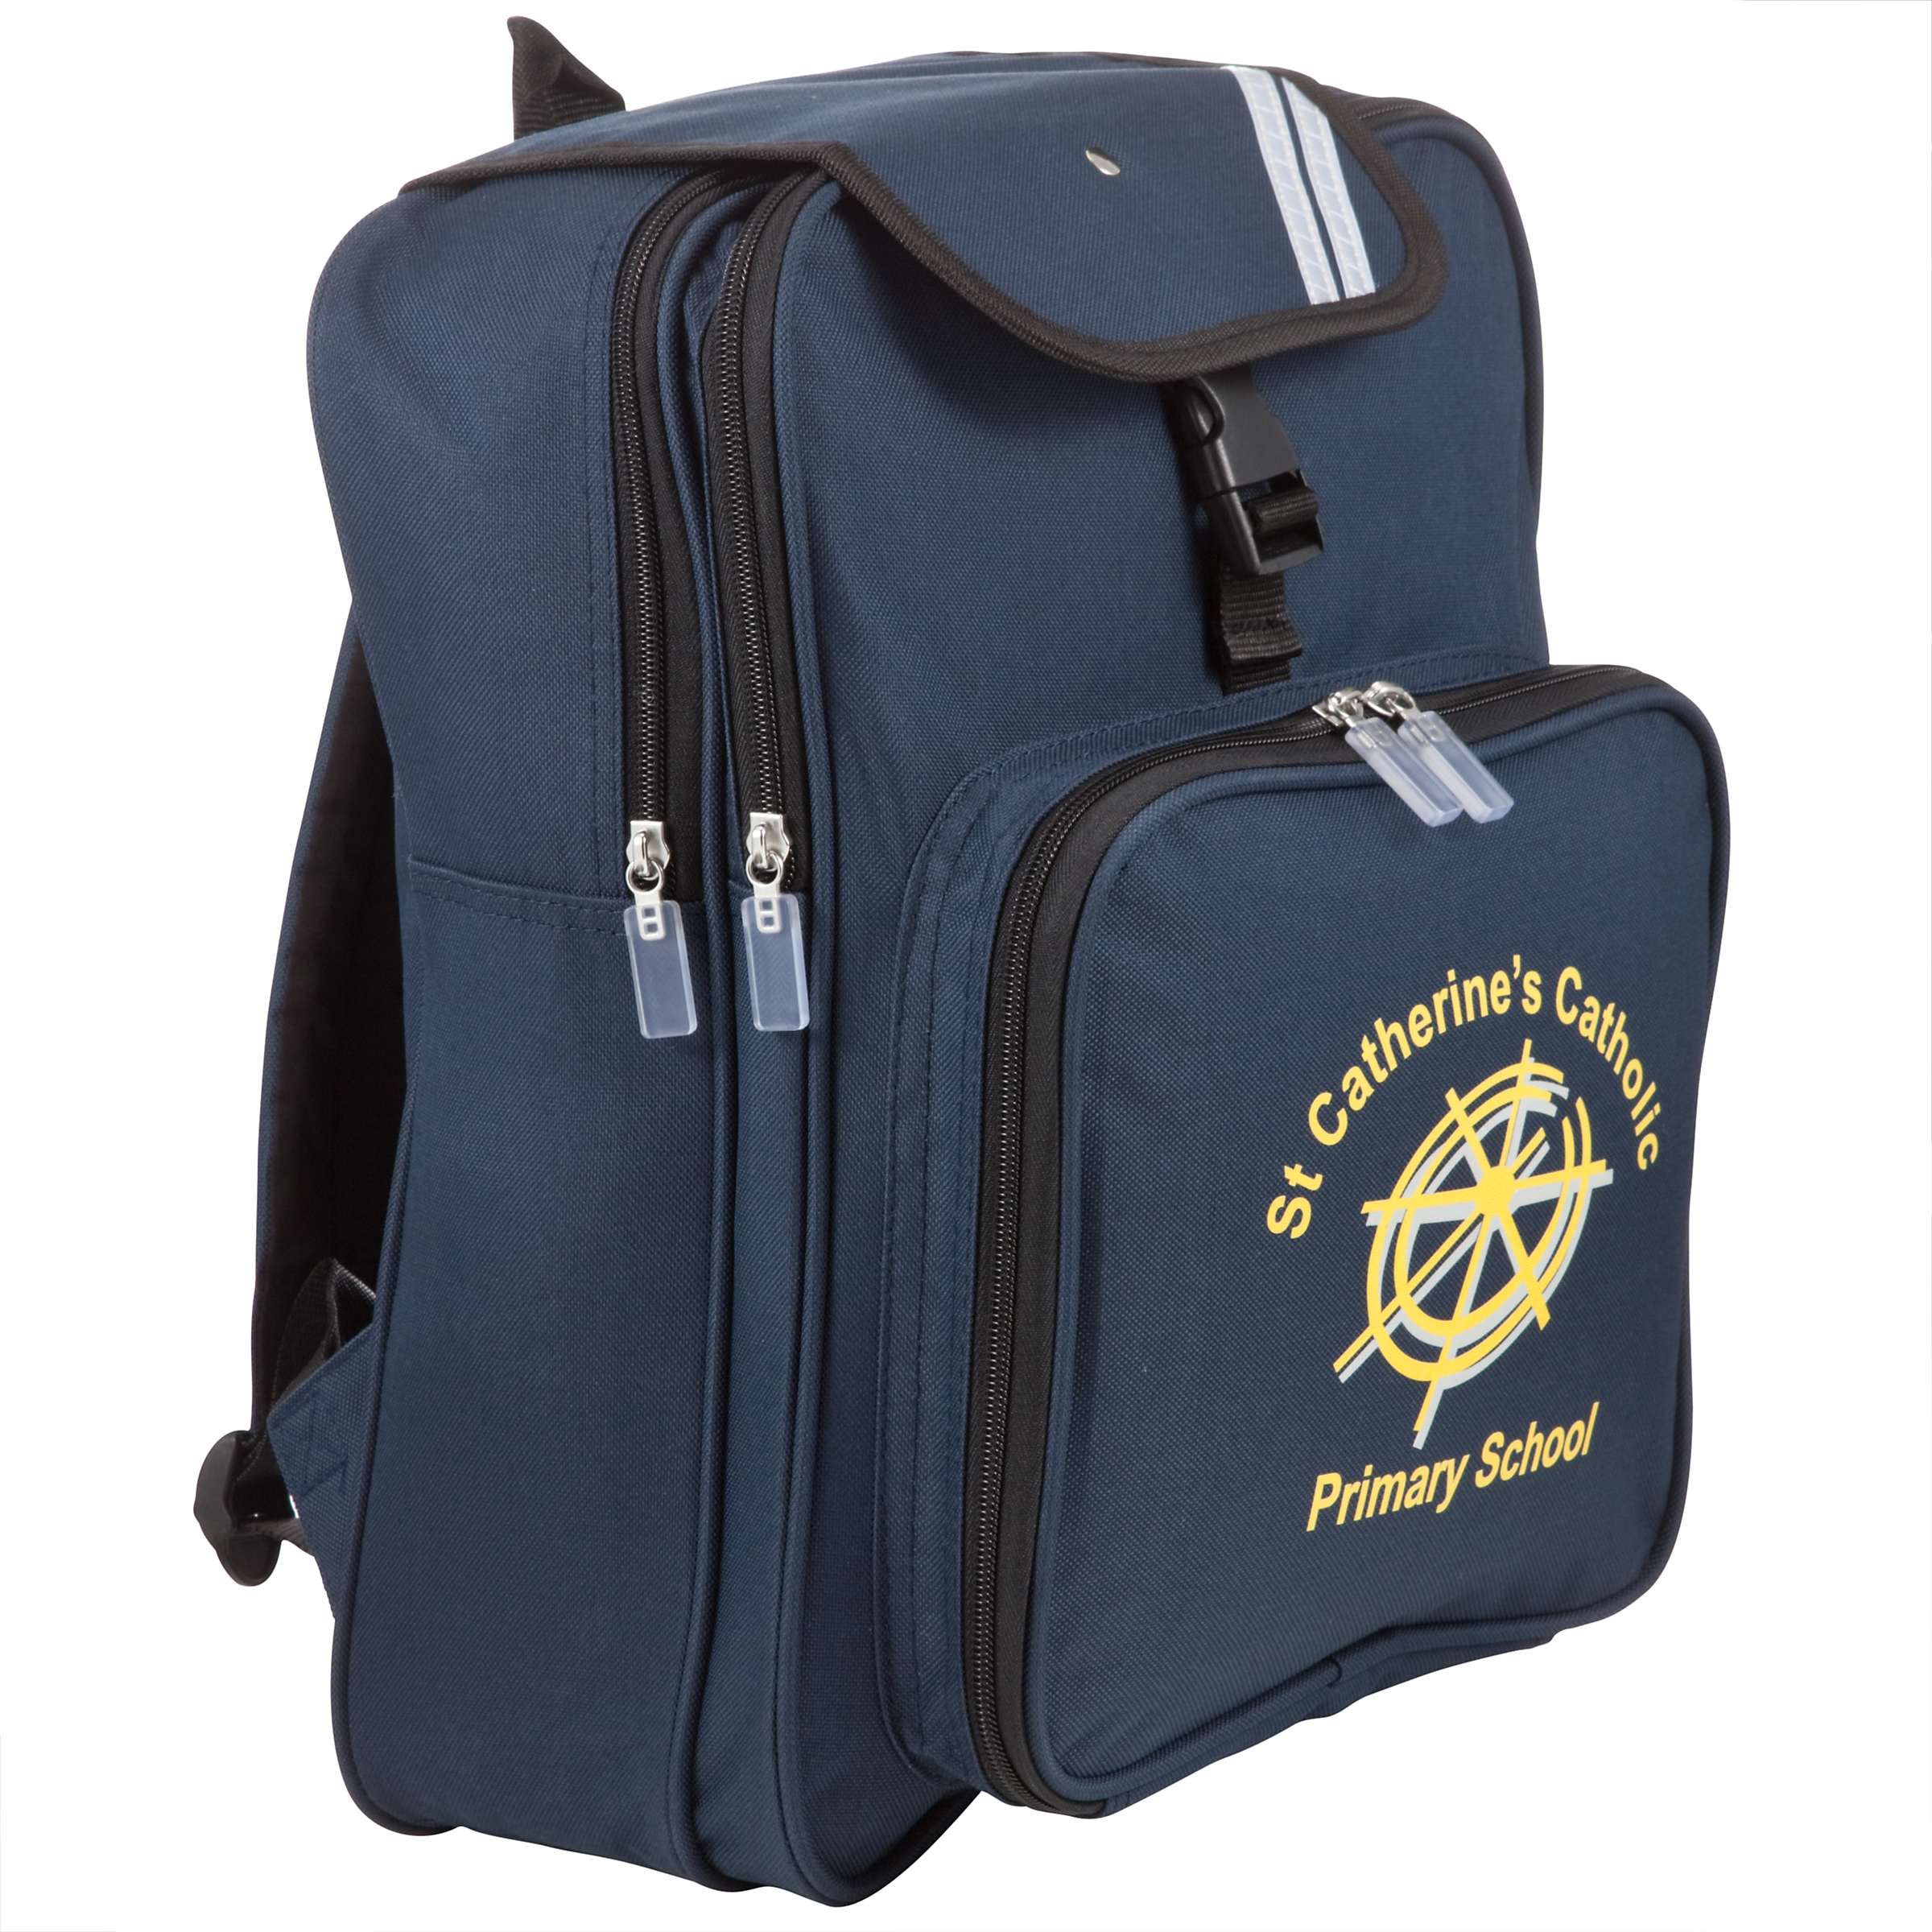 Buy St Catherine's Catholic Primary School Backpack, Navy Online at johnlewis.com